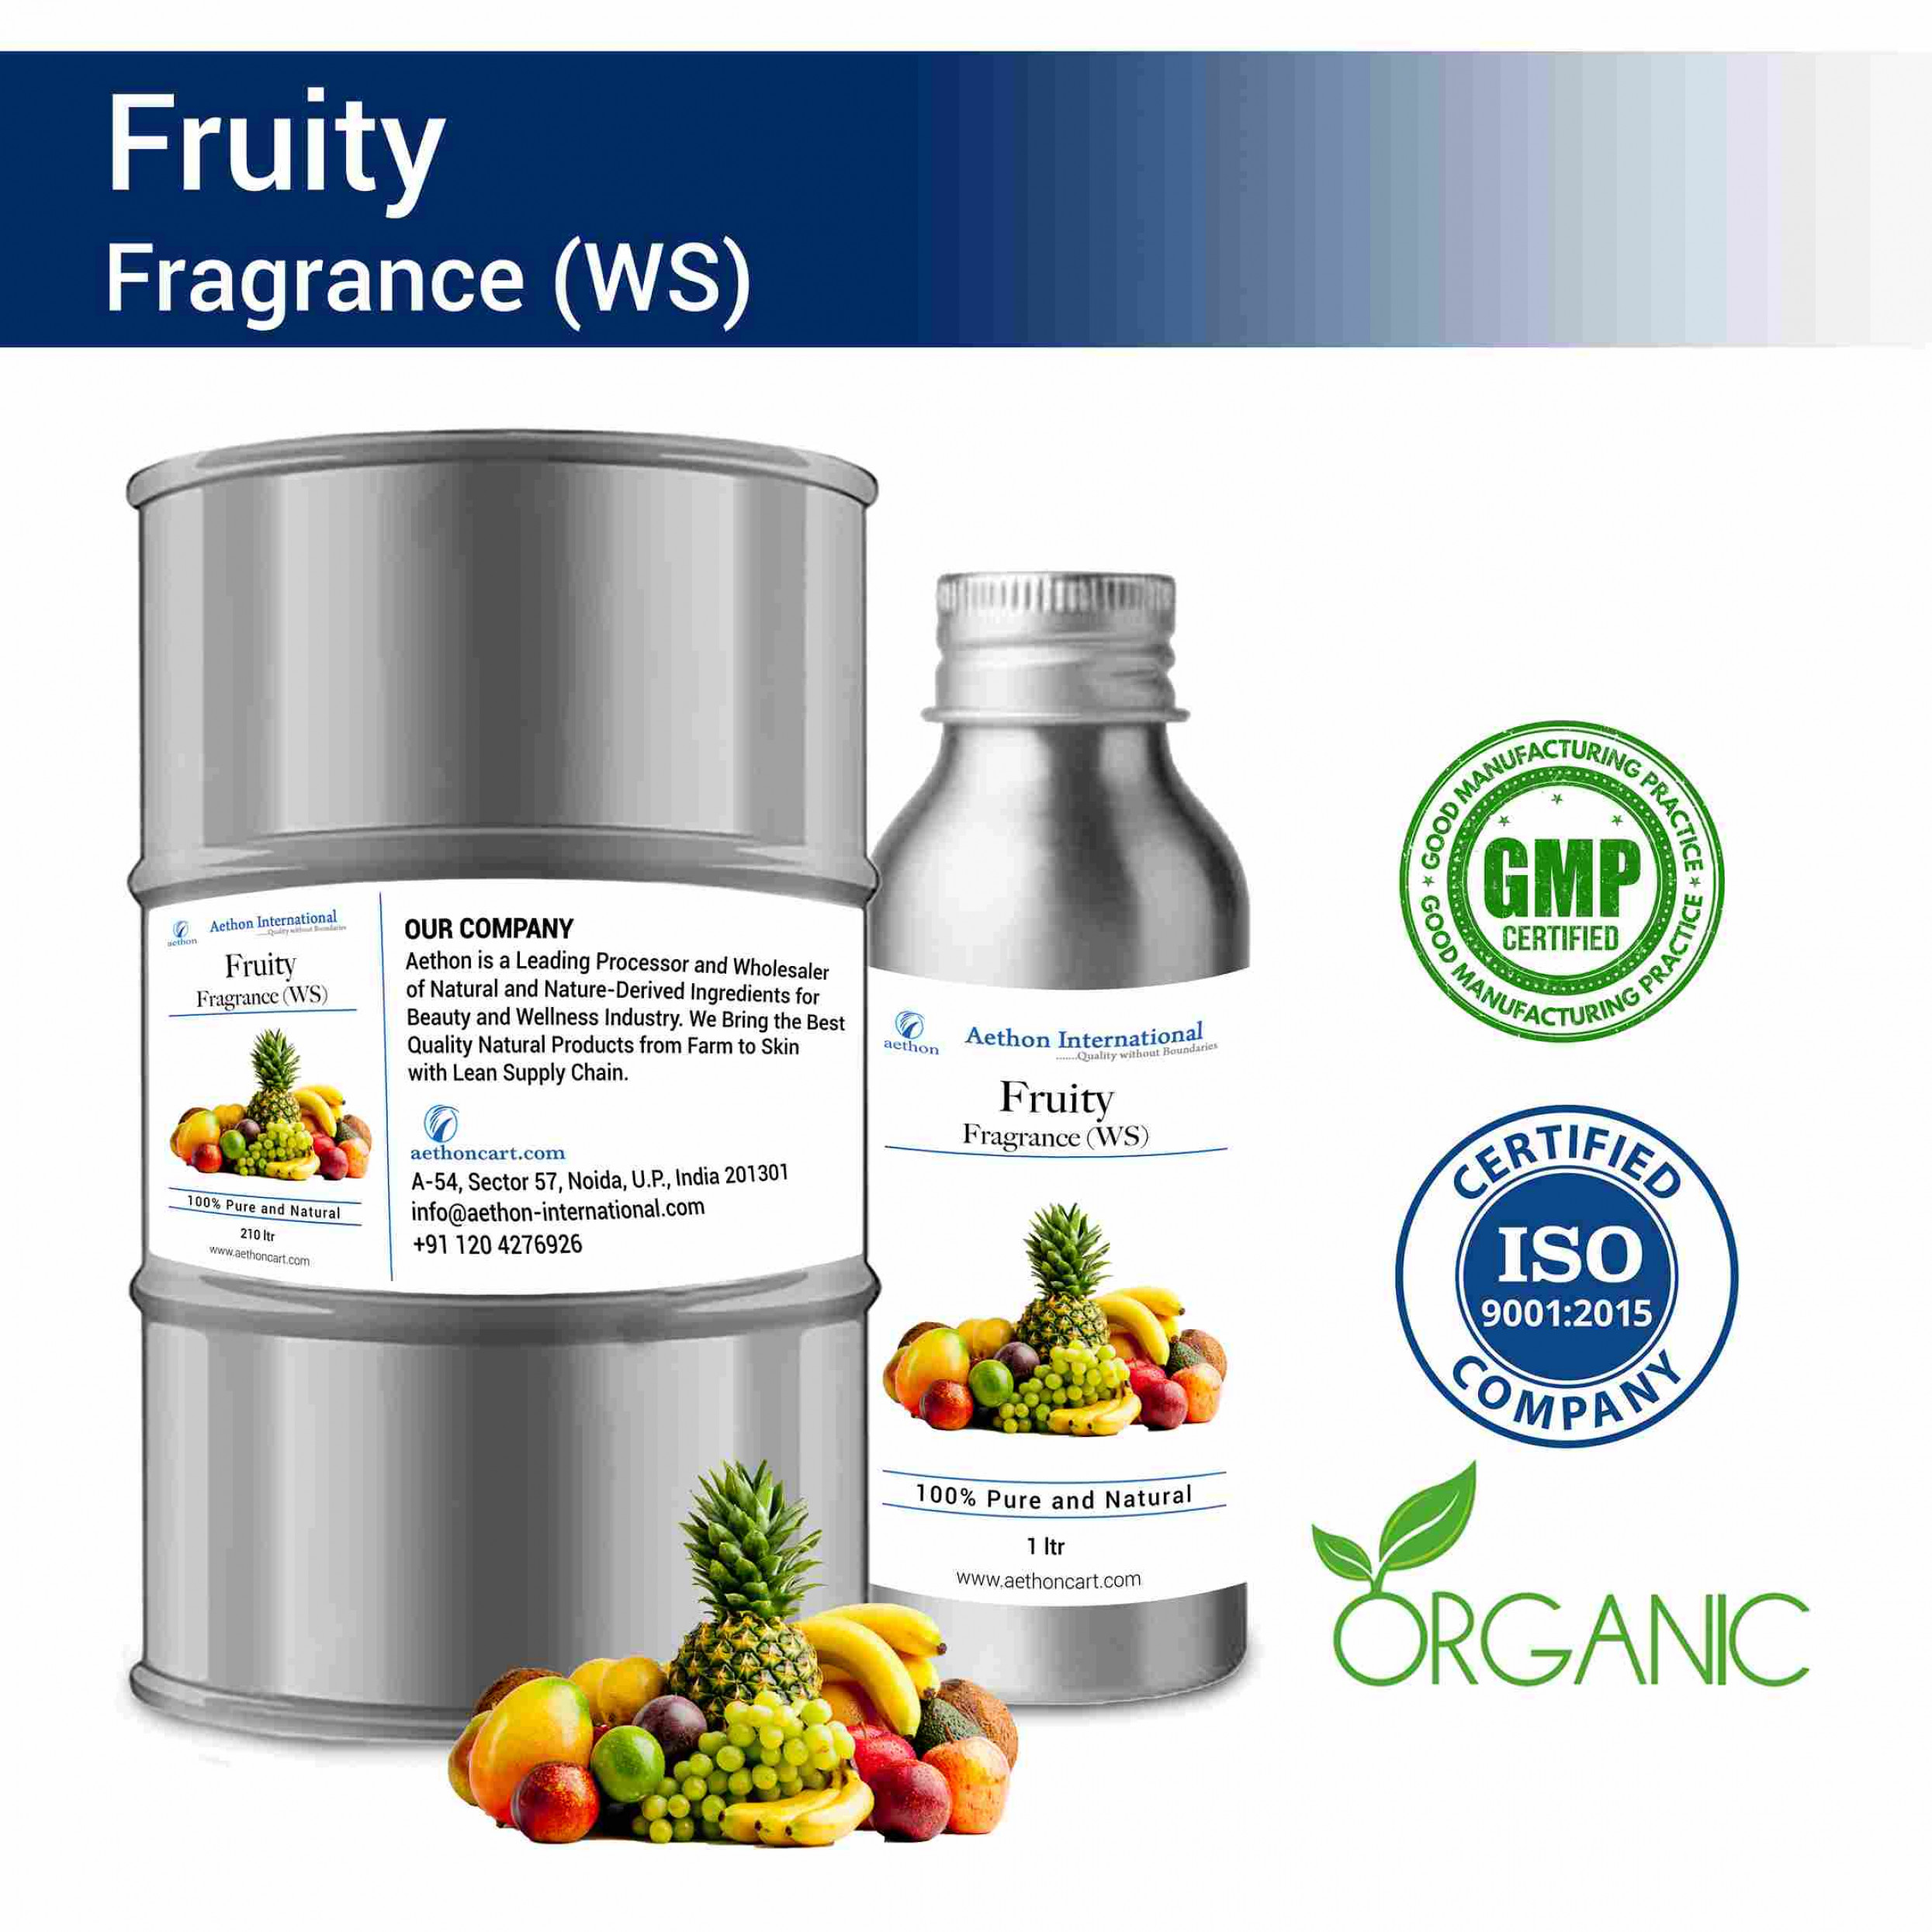 Fruity Fragrance (WS)